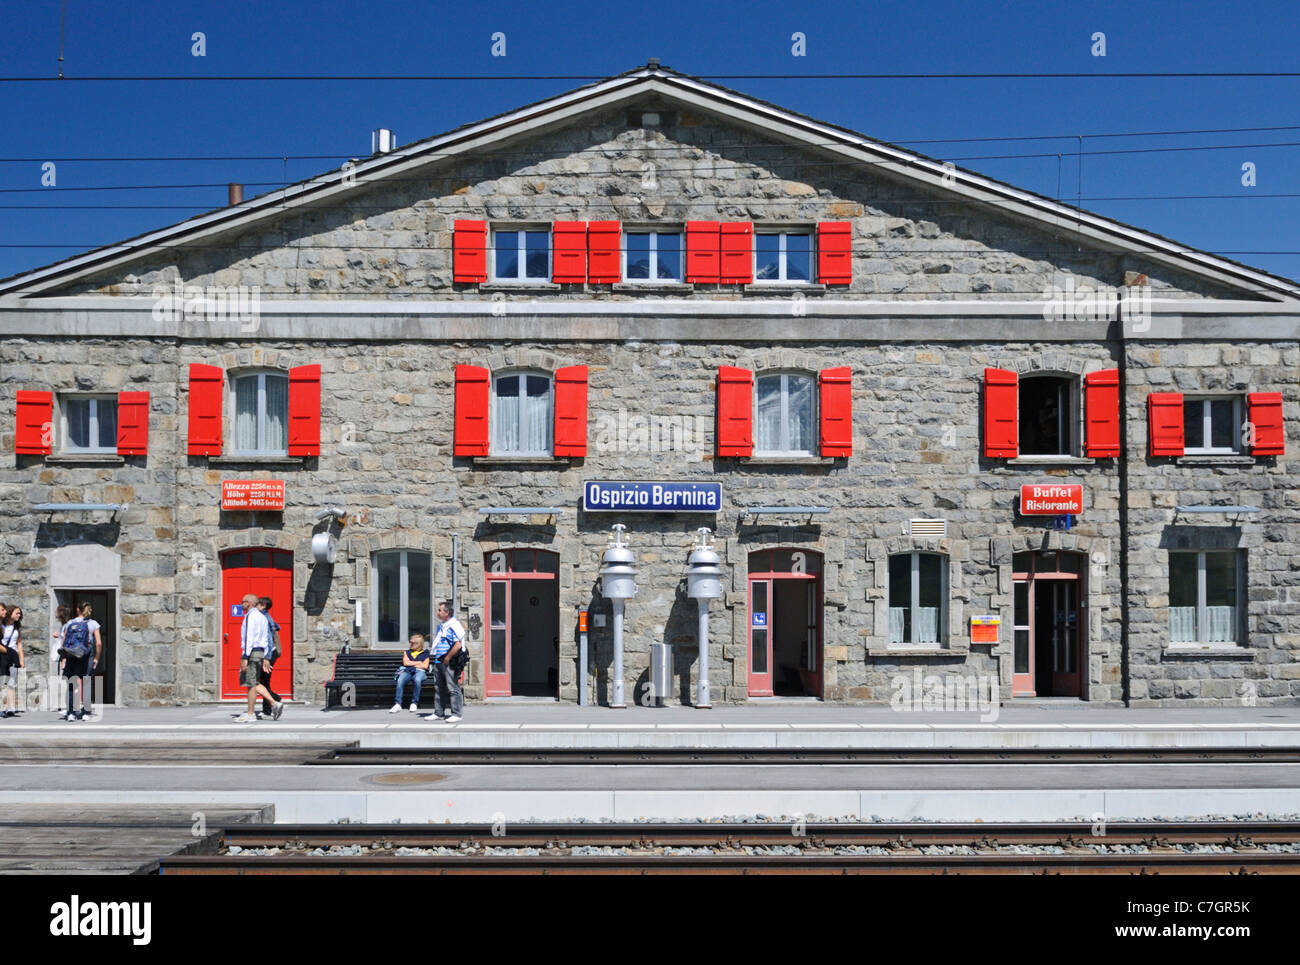 Bahnhof Ospizio Bernina auf dem Berninapass. Schweiz, Europa, Graubünden, UNESCO World Heritage Rhaetien Eisenbahn. Stockfoto